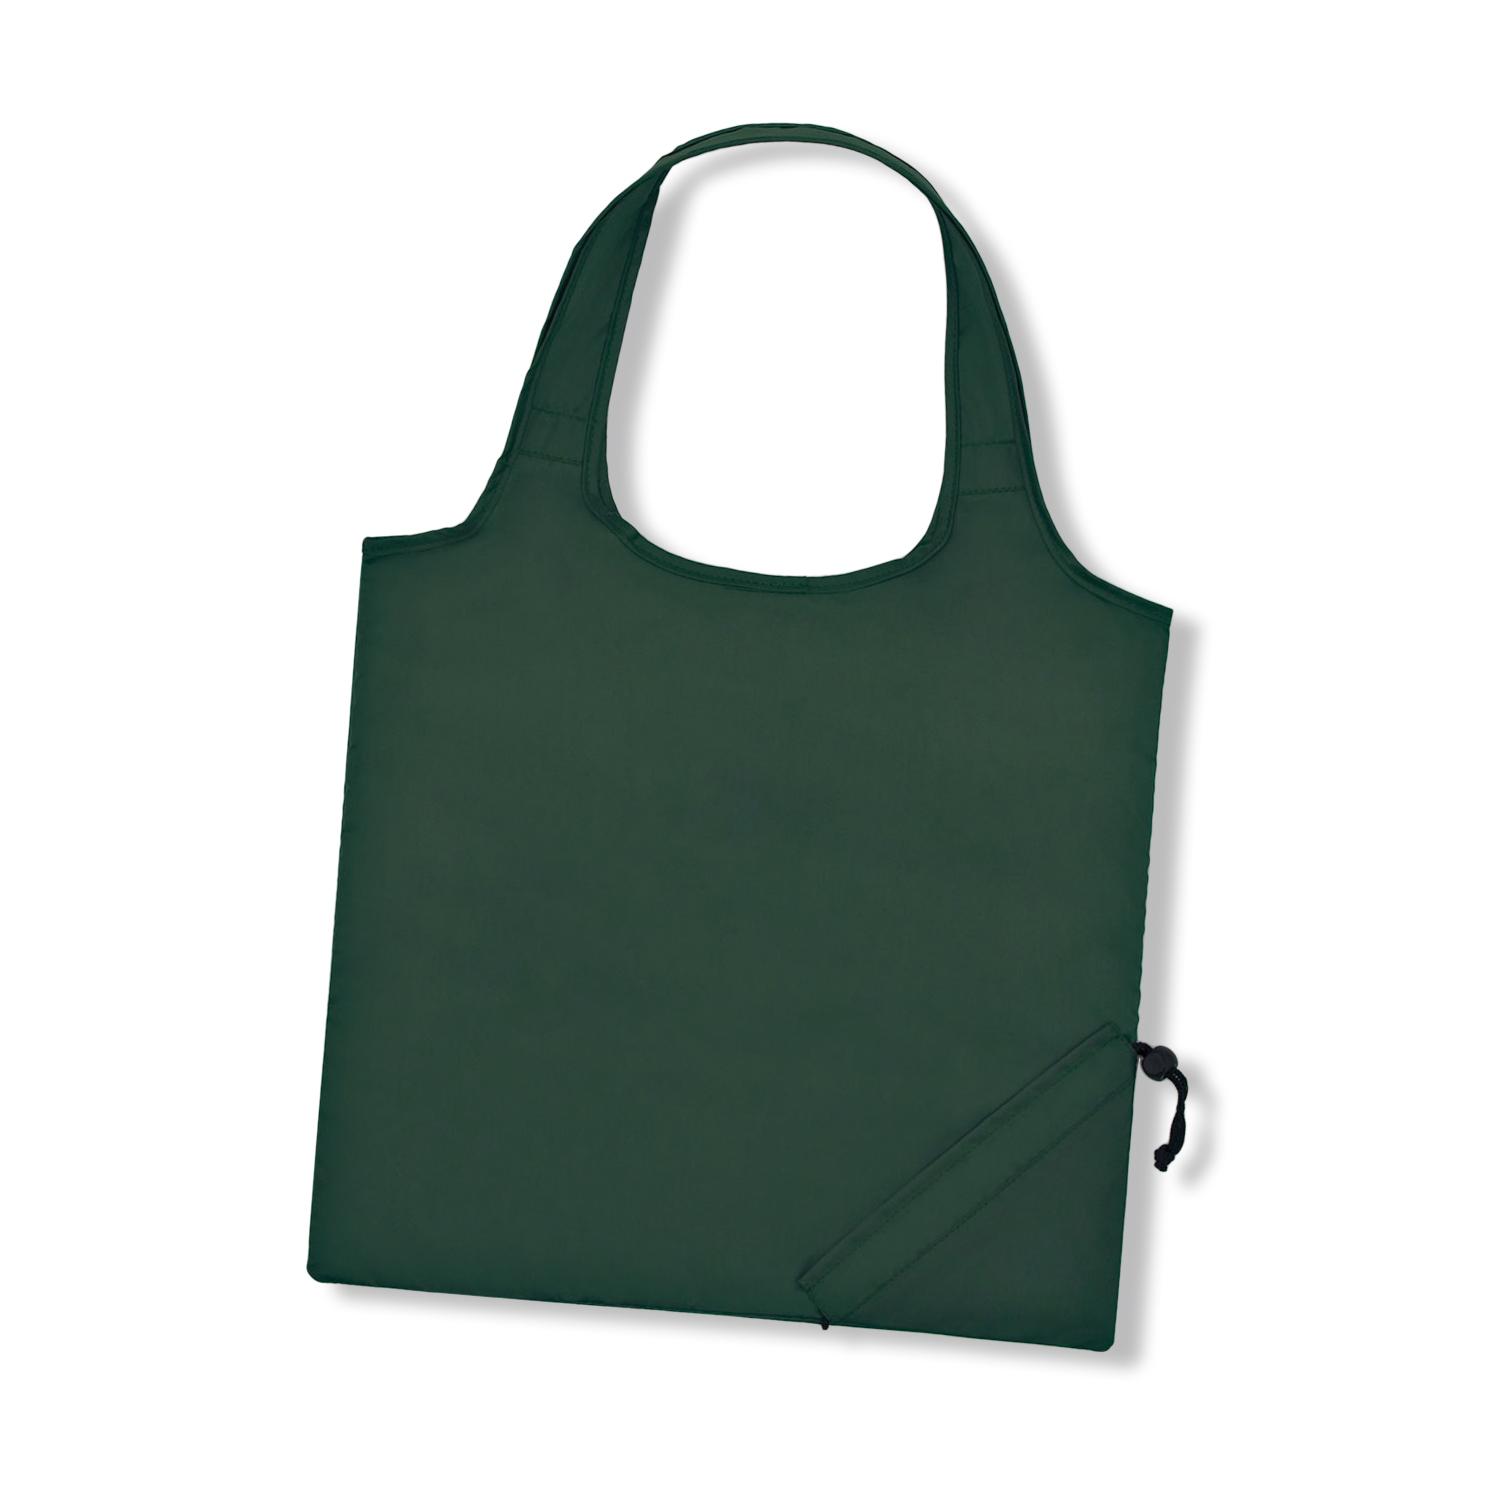 Foldaway Tote Bag - Image Group